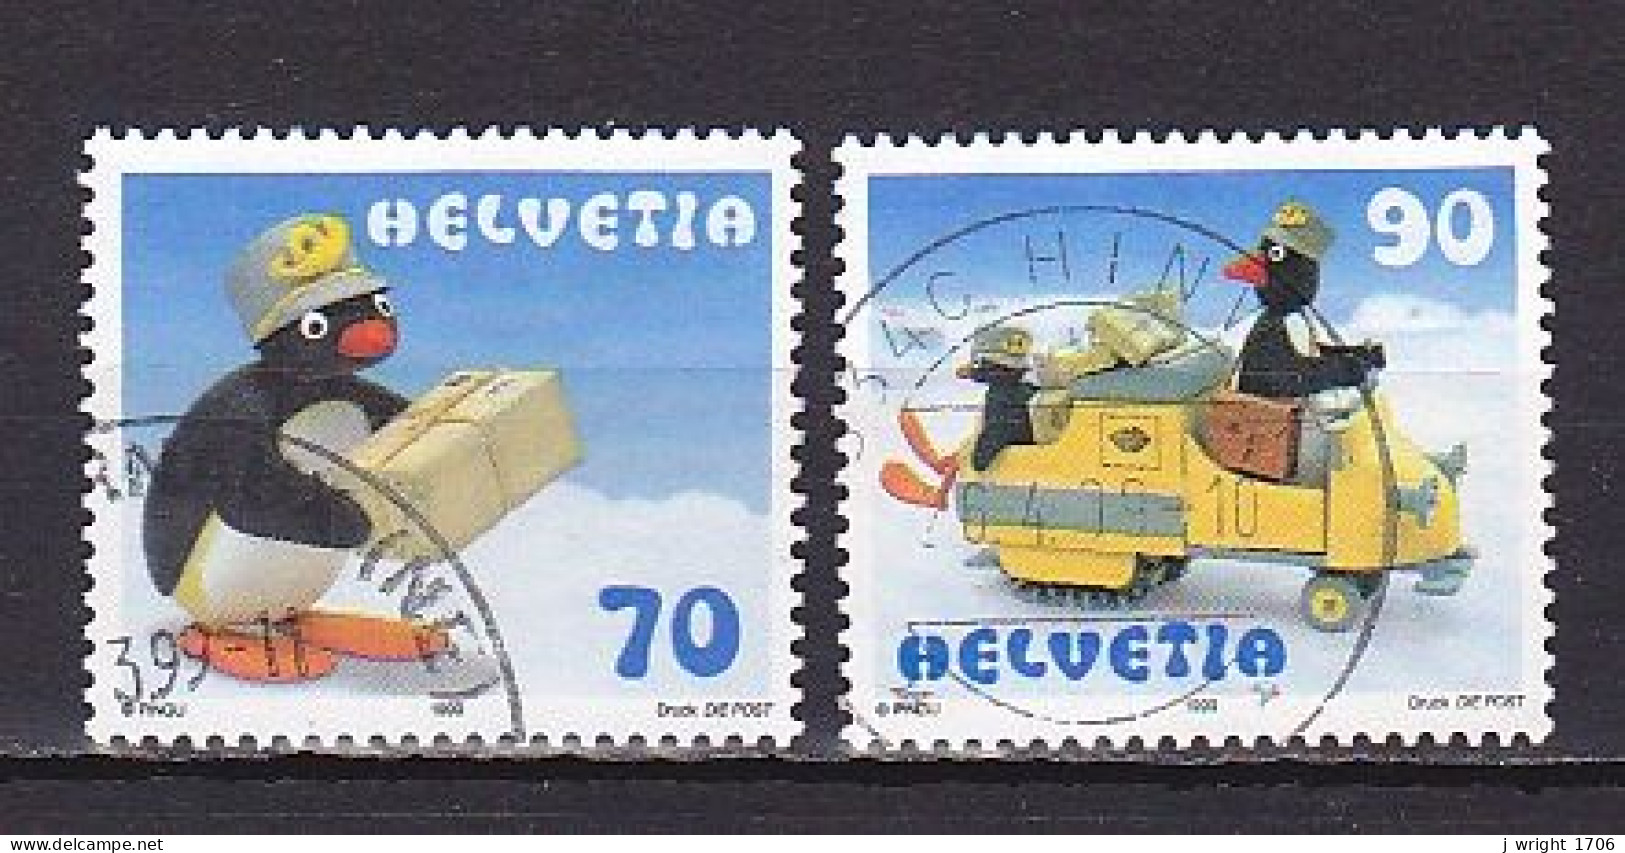 Switzerland, 1999, Pingu, Set, USED - Used Stamps